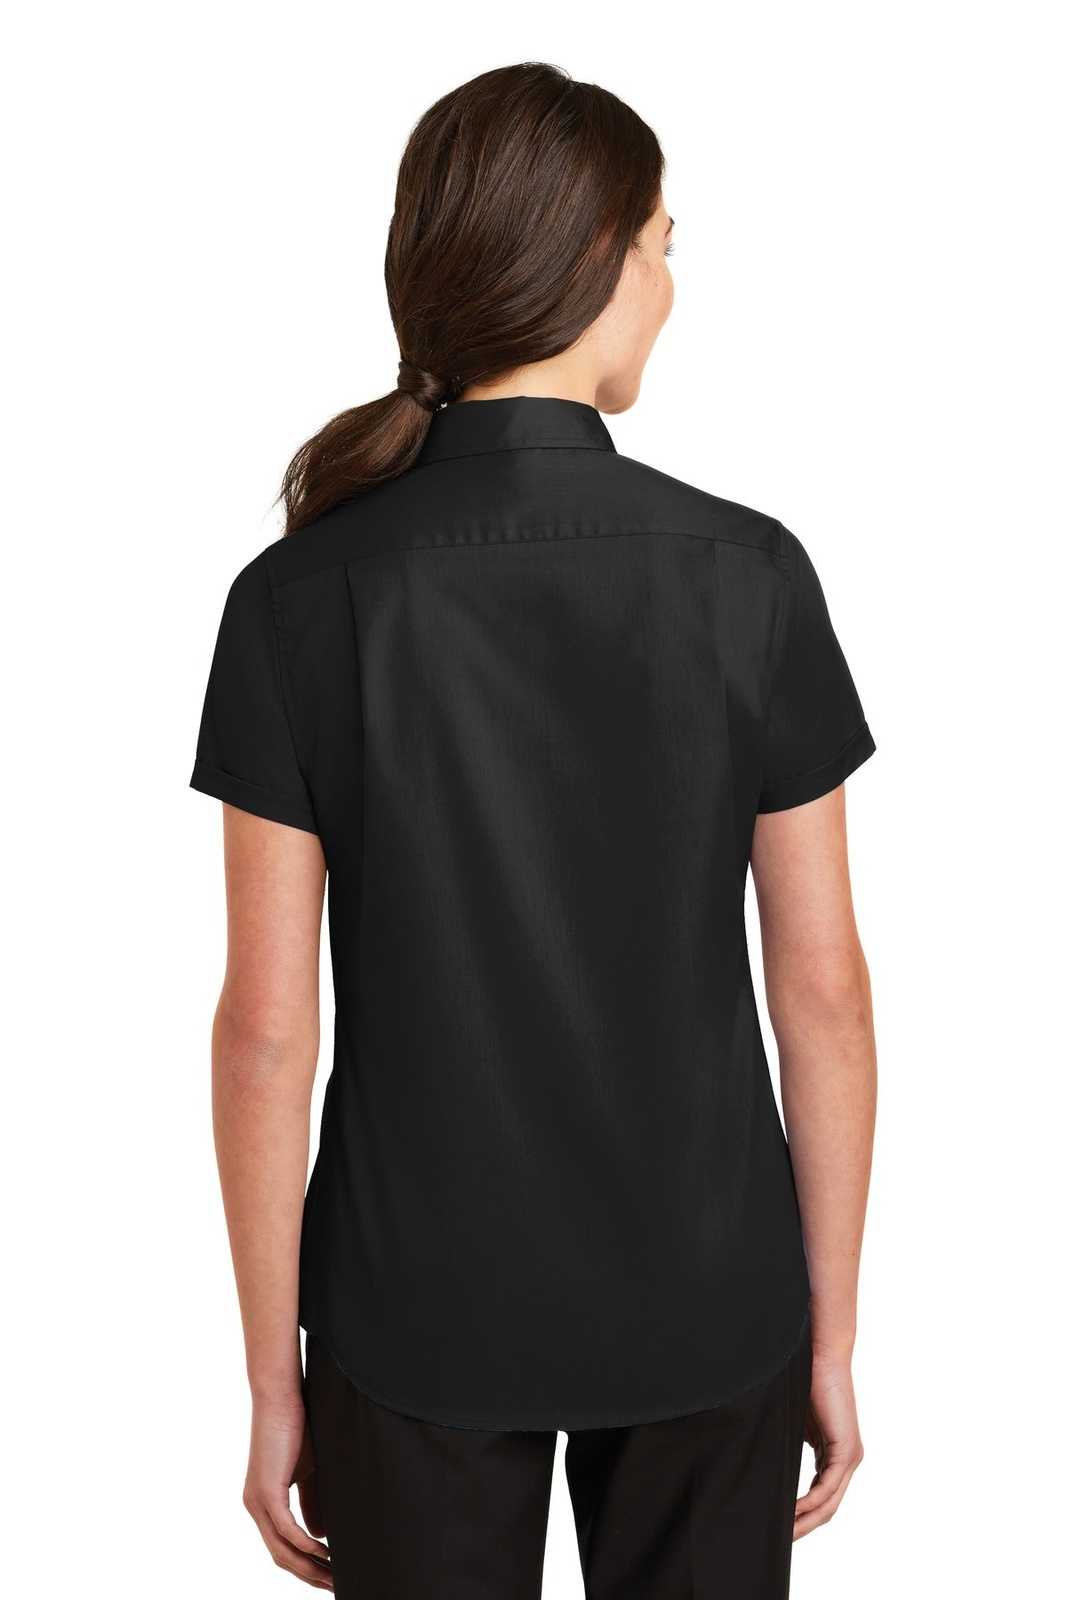 Port Authority L664 Ladies Short Sleeve Superpro Twill Shirt - Black - HIT a Double - 1